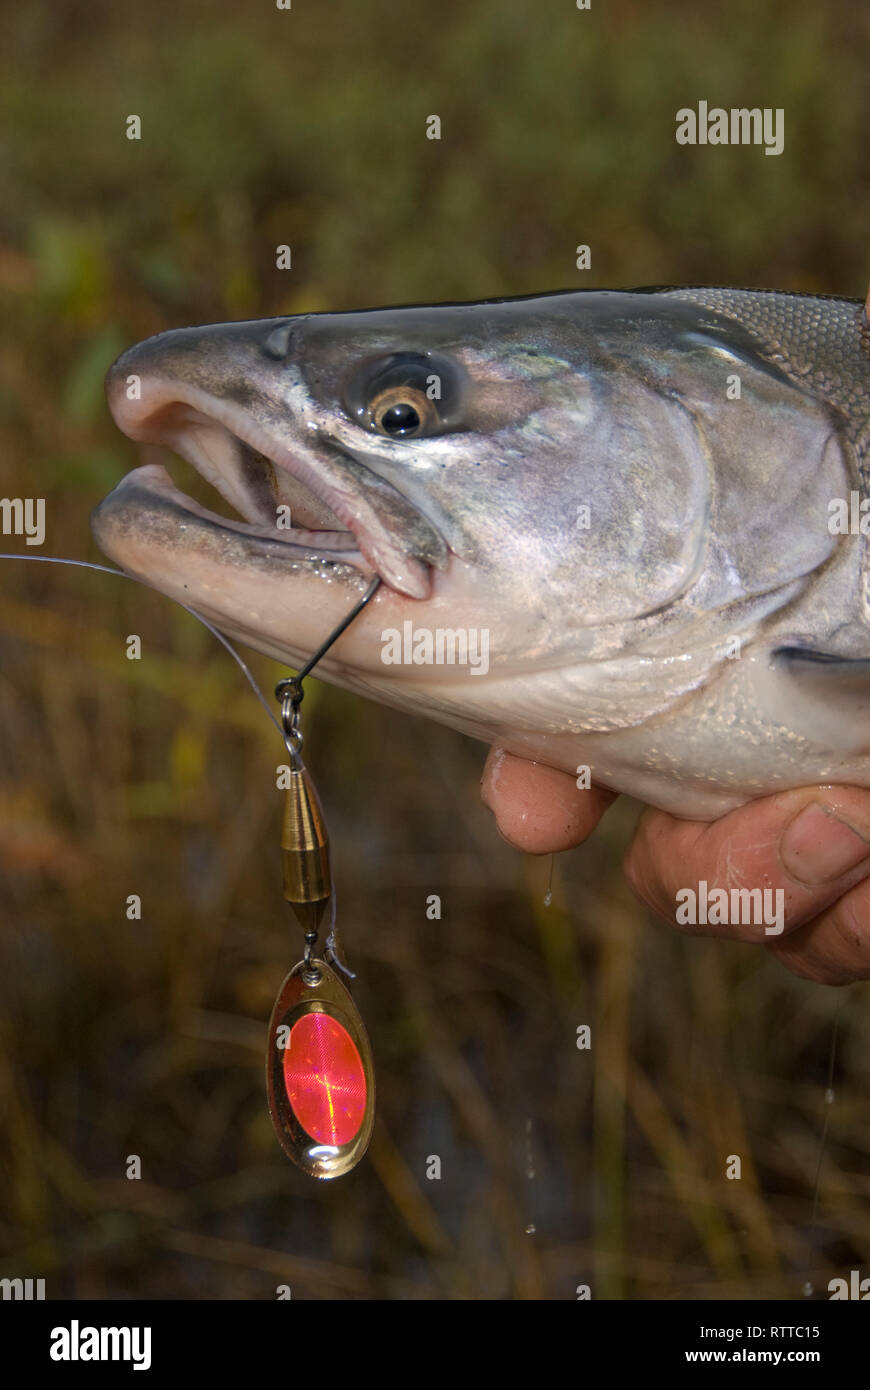 https://c8.alamy.com/comp/RTTC15/silvercohosalmon-caught-on-a-fishing-luresouthest-alaska-RTTC15.jpg